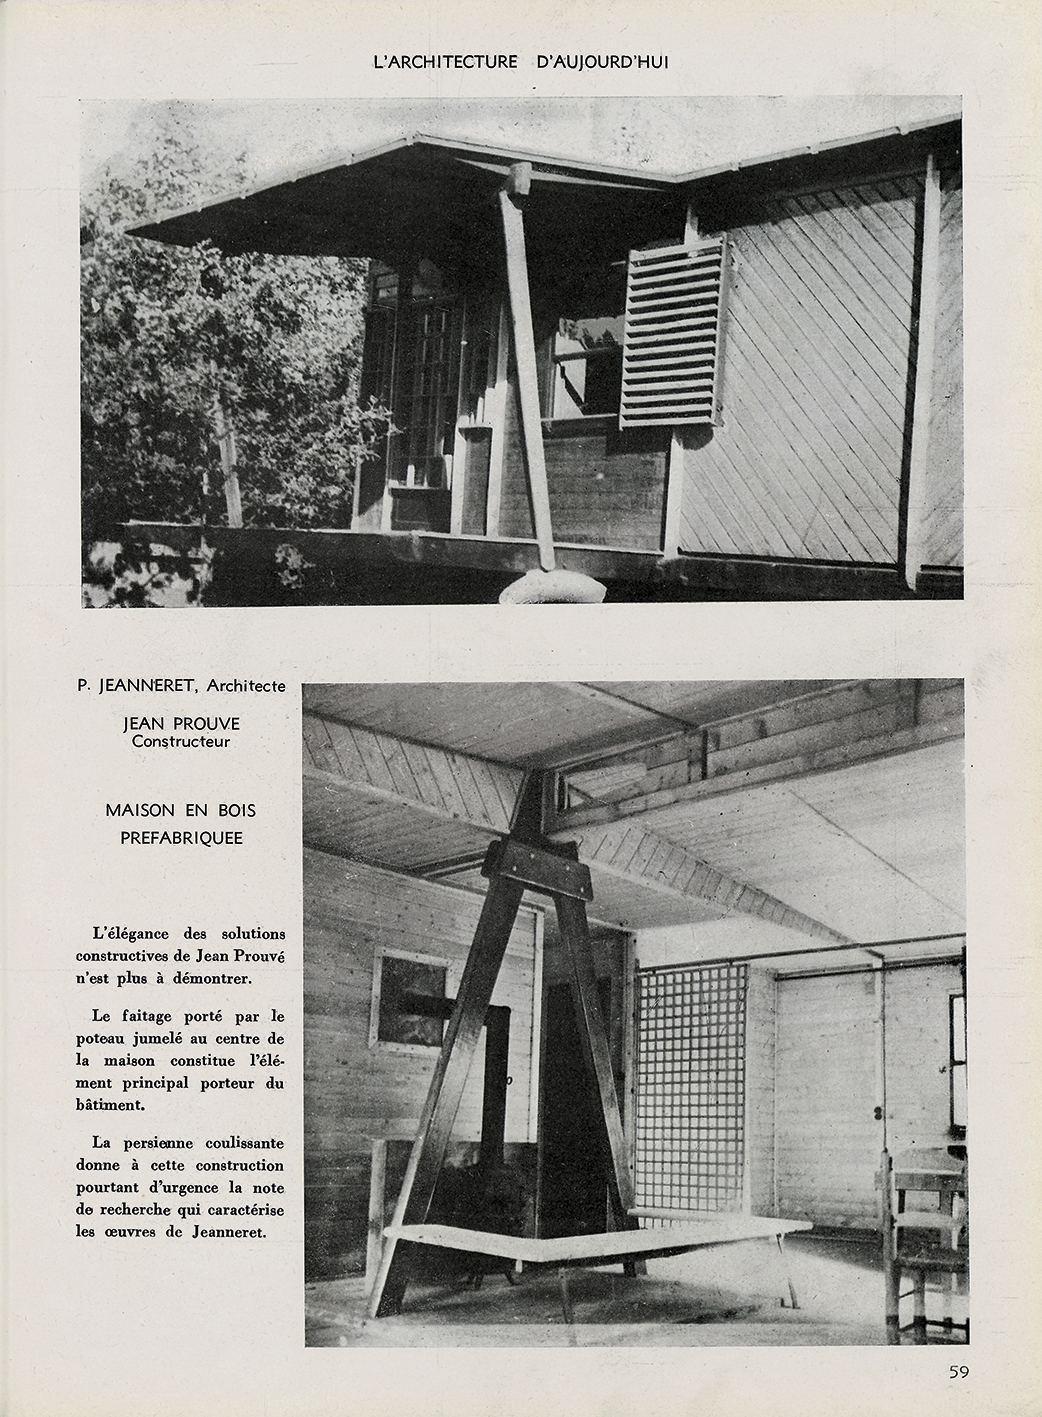 “Prefabricated wooden house – Prefabricated metal house, architect Pierre Jeanneret. Constructor Jean Prouvé”, <I>L’Architecture d’aujourd’hui</i>, no. 4, November-December 1945.